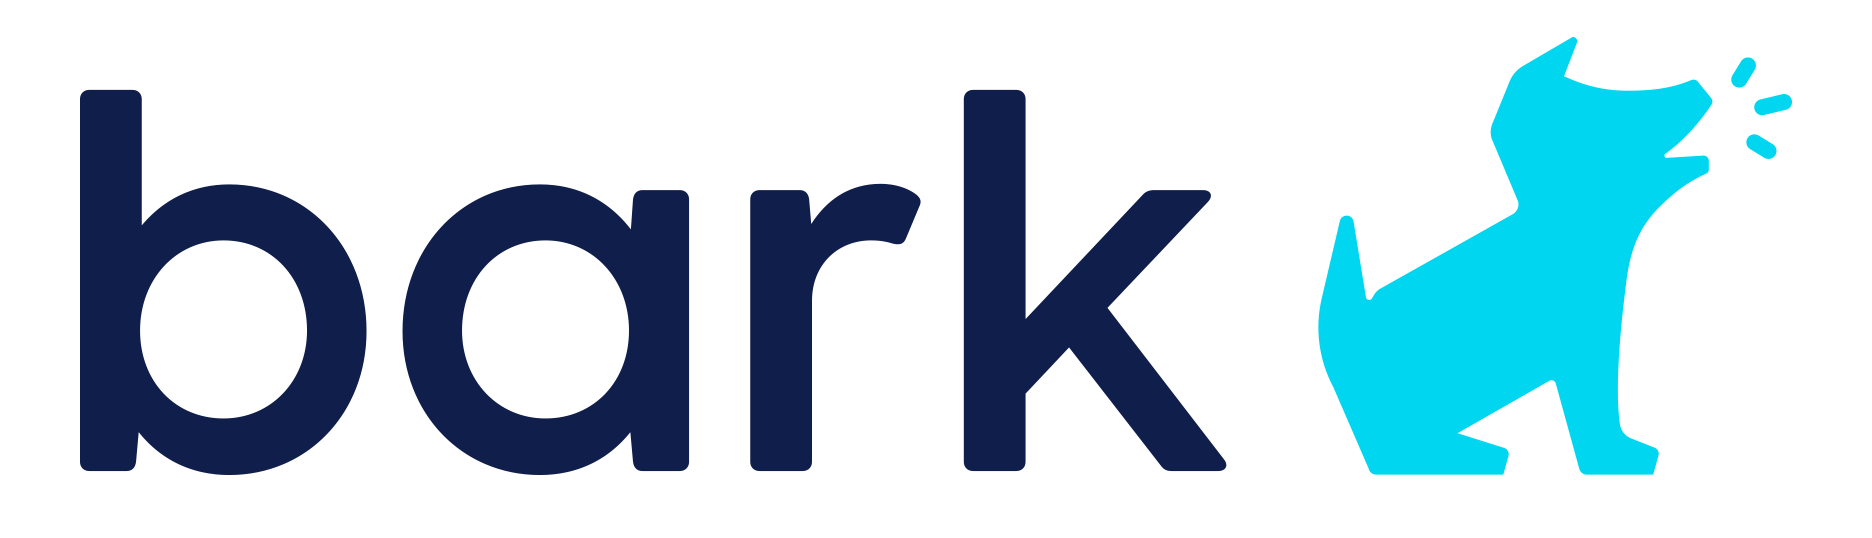 Bark Technologies, Inc.